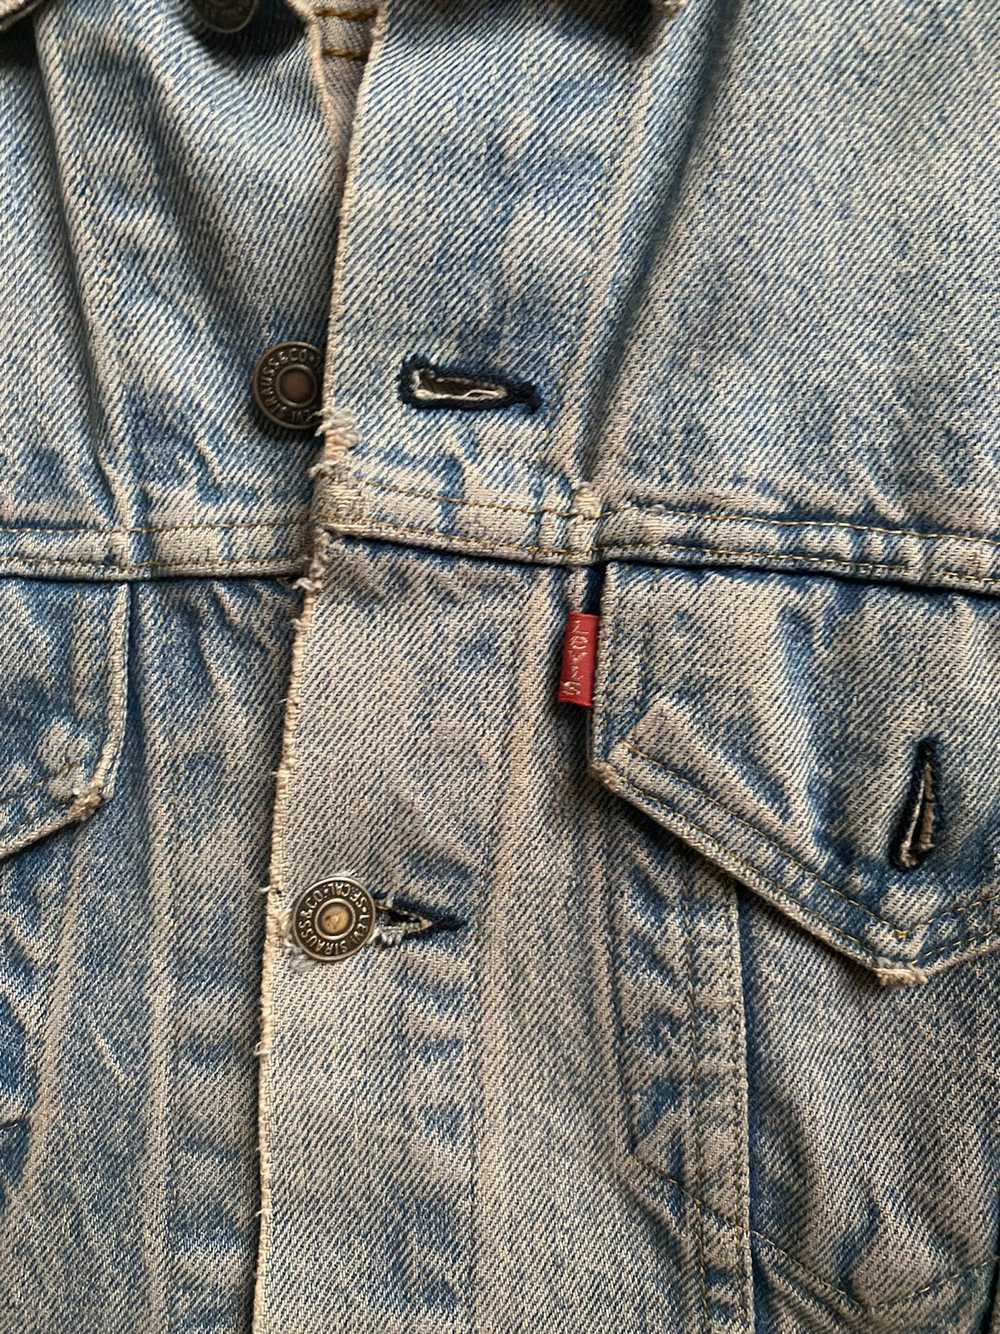 Levi's Vintage Repaired Levi’s Type 2 Denim Jacket - image 8